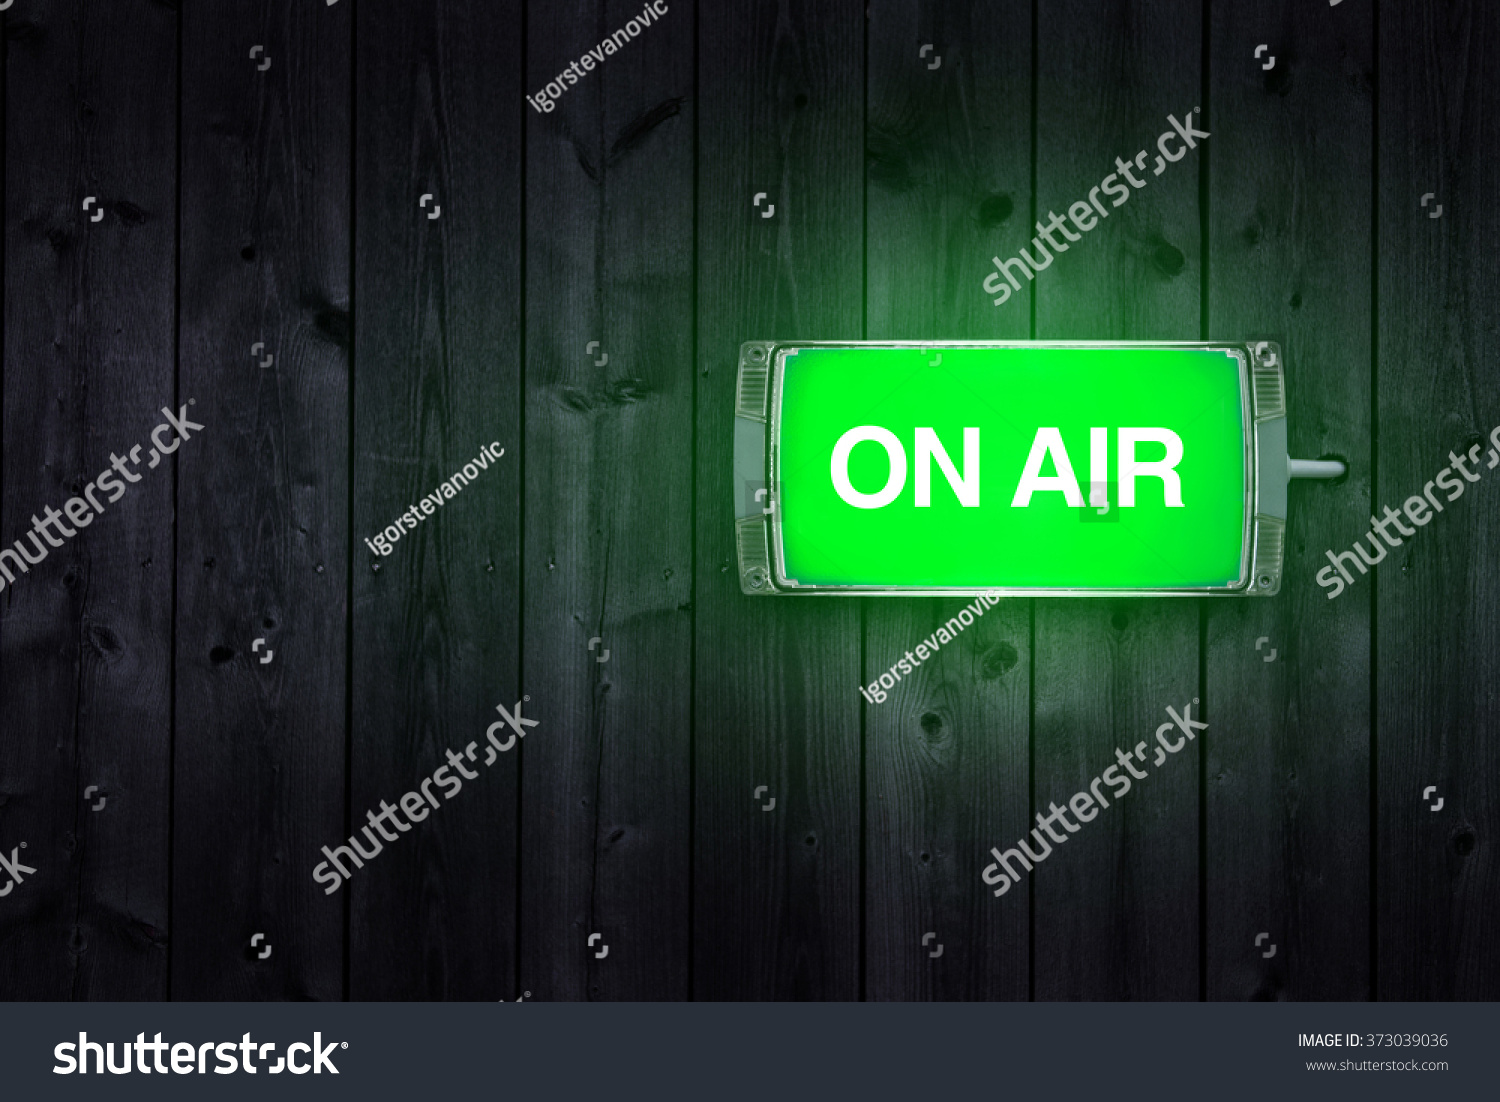 On Air sign, green illuminated radio station signage. #373039036